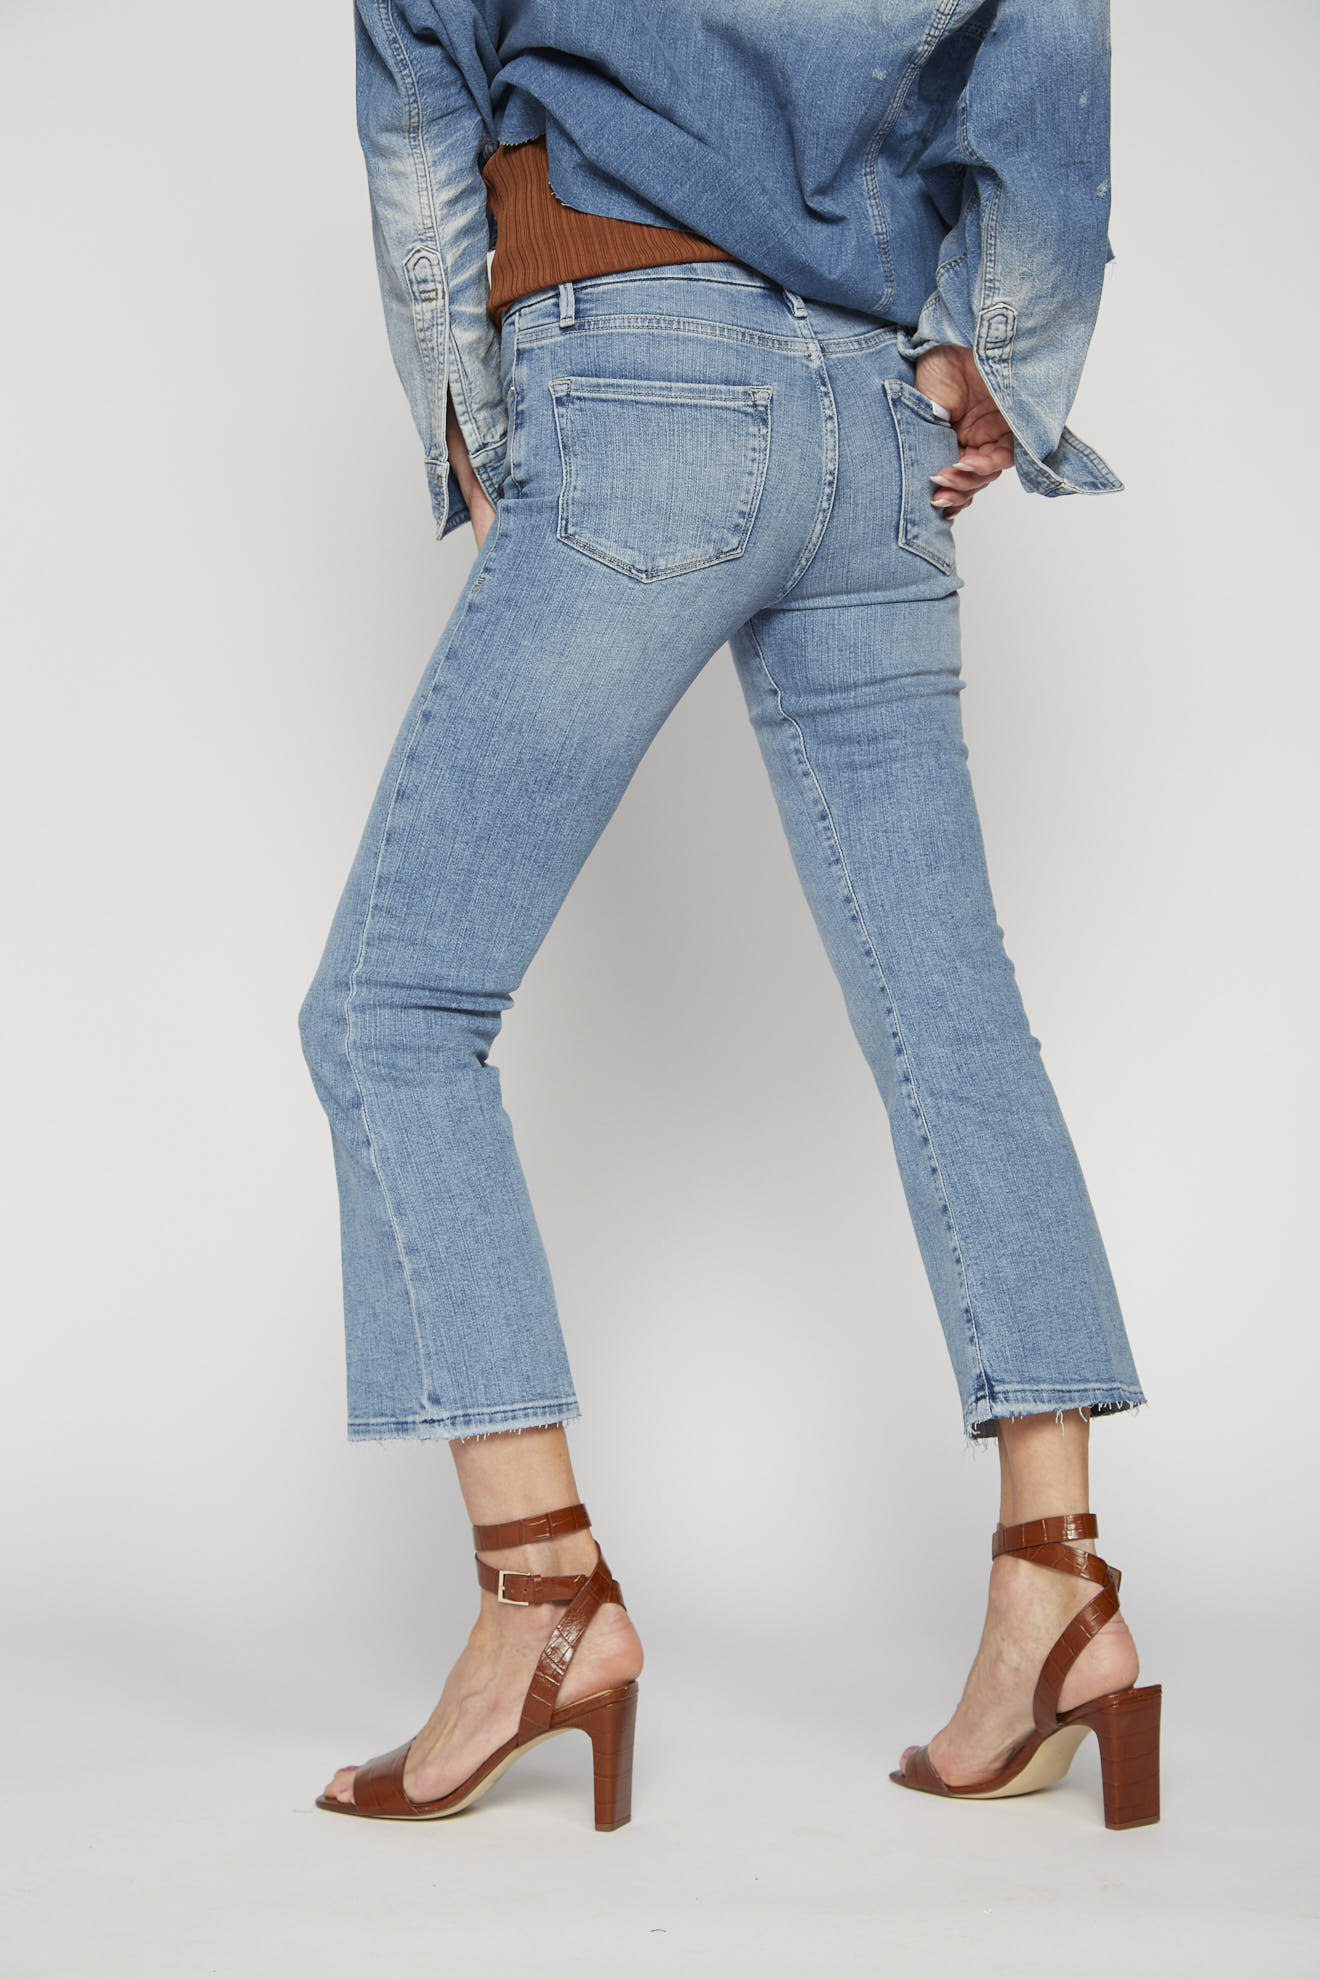 frame jeans denim plain mix model back